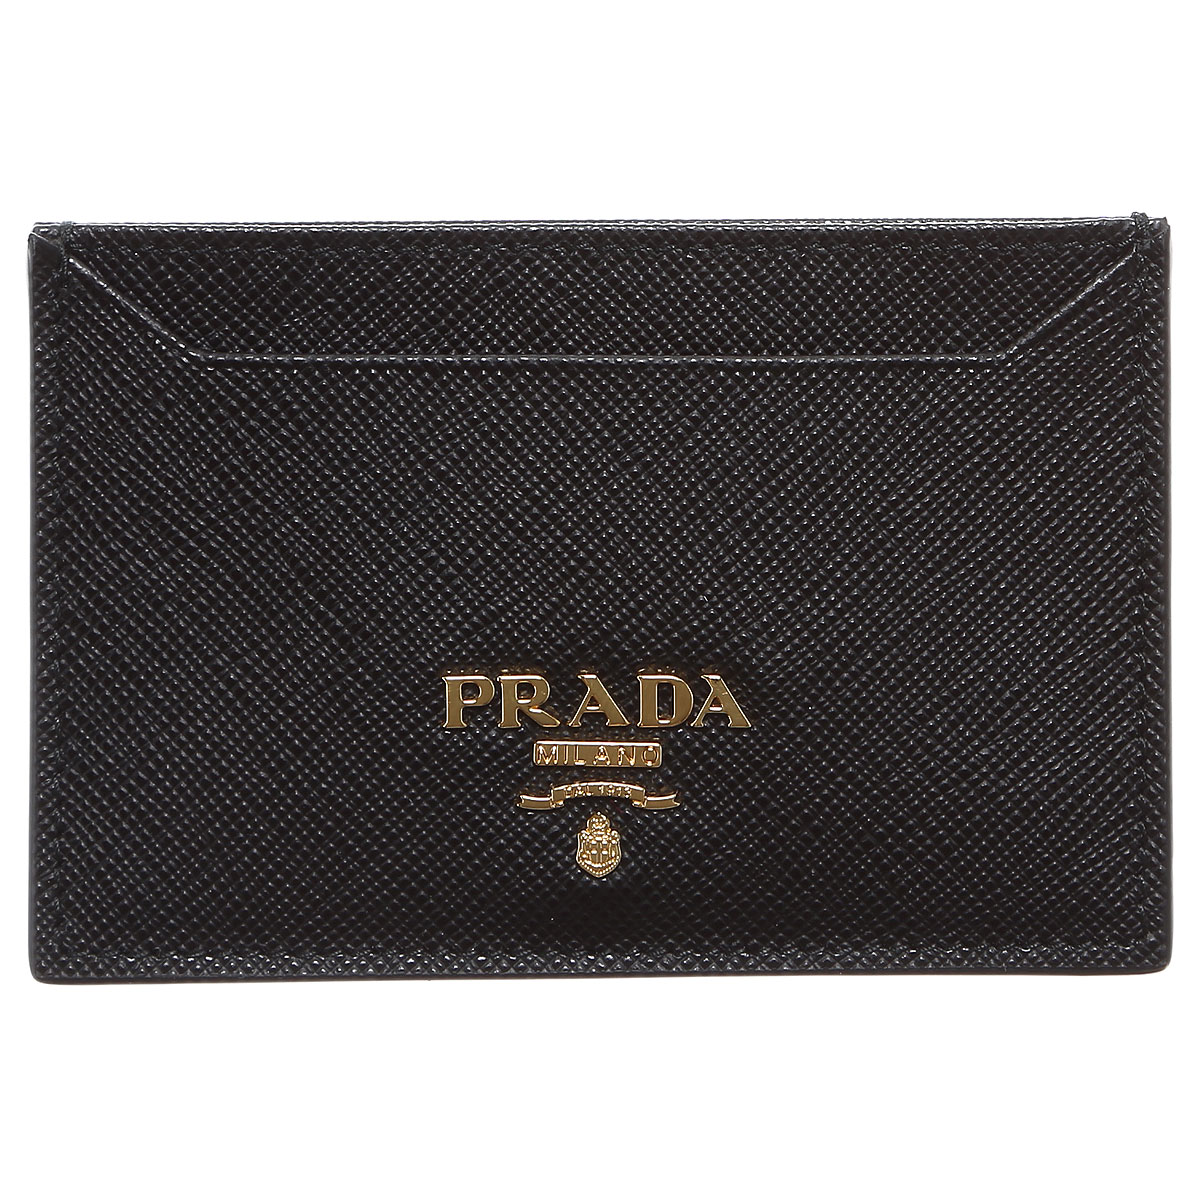 Womens Wallets Prada, Style code: 1mc208-qwa-002